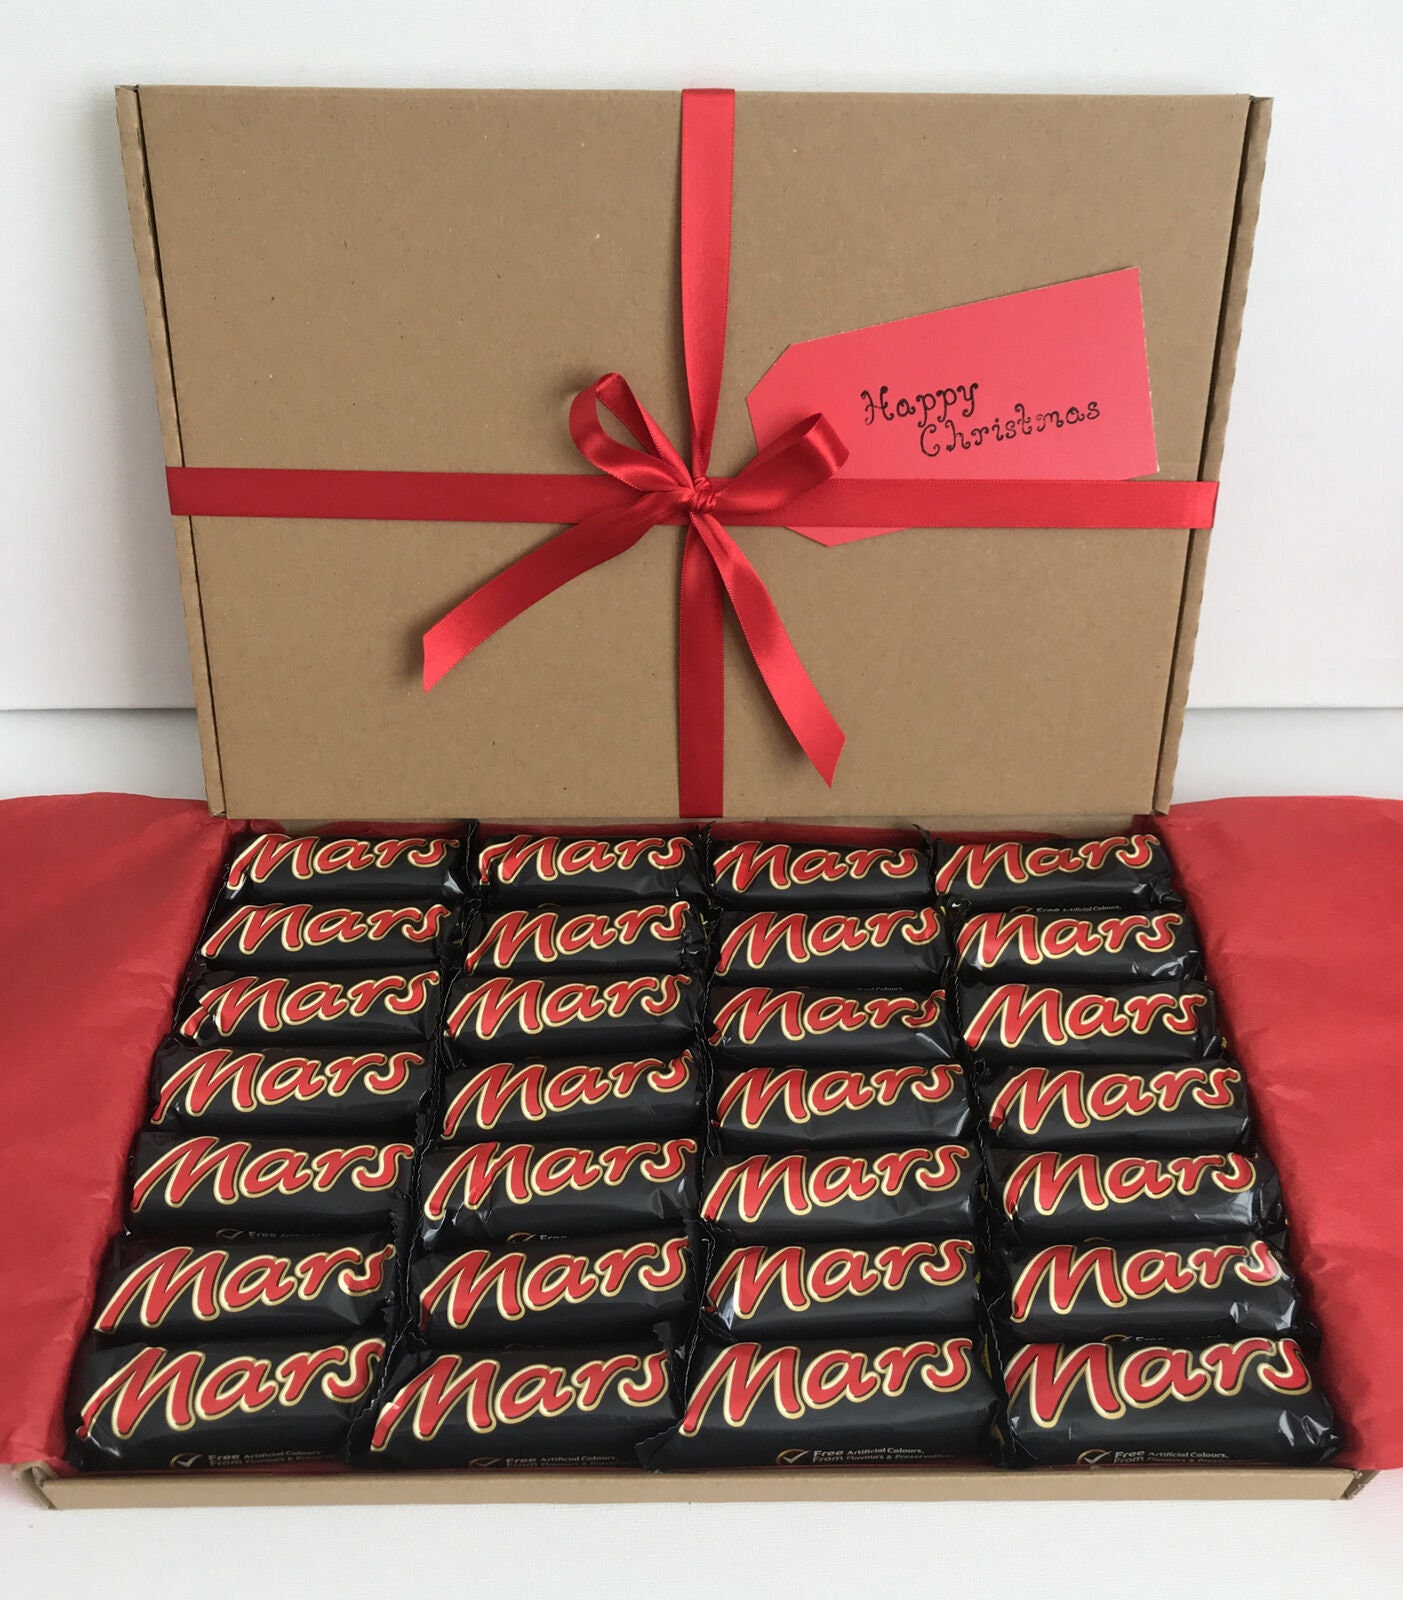 Mars Funsize Selection Box Chocolate Hamper Sweets Gift Box - 1kg